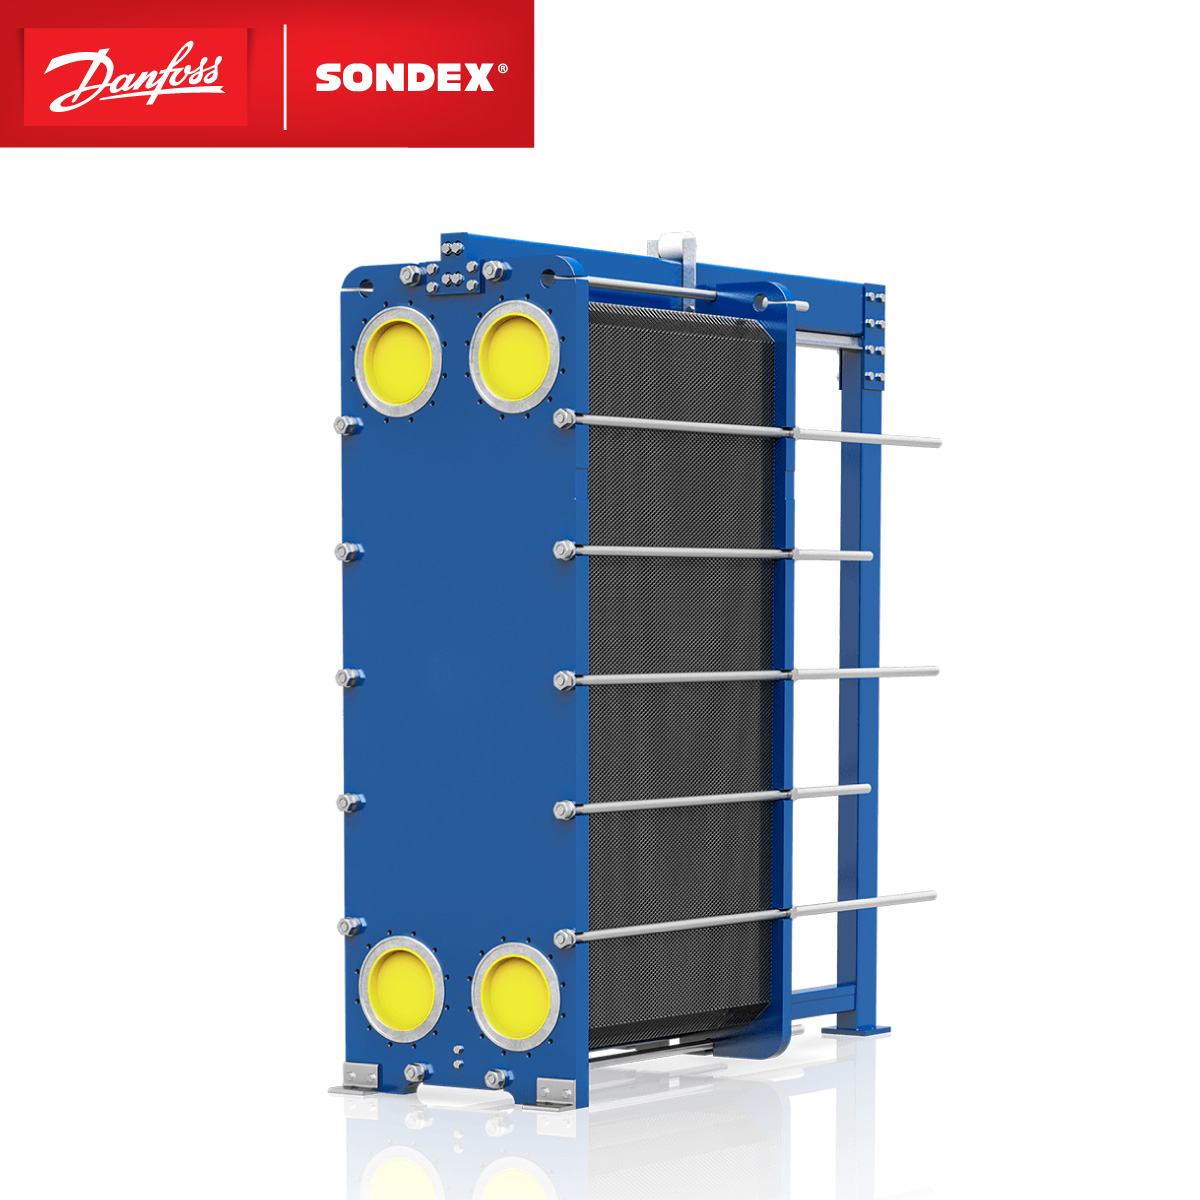 S188 Sondex Gasketed Plate Heat Exchangers